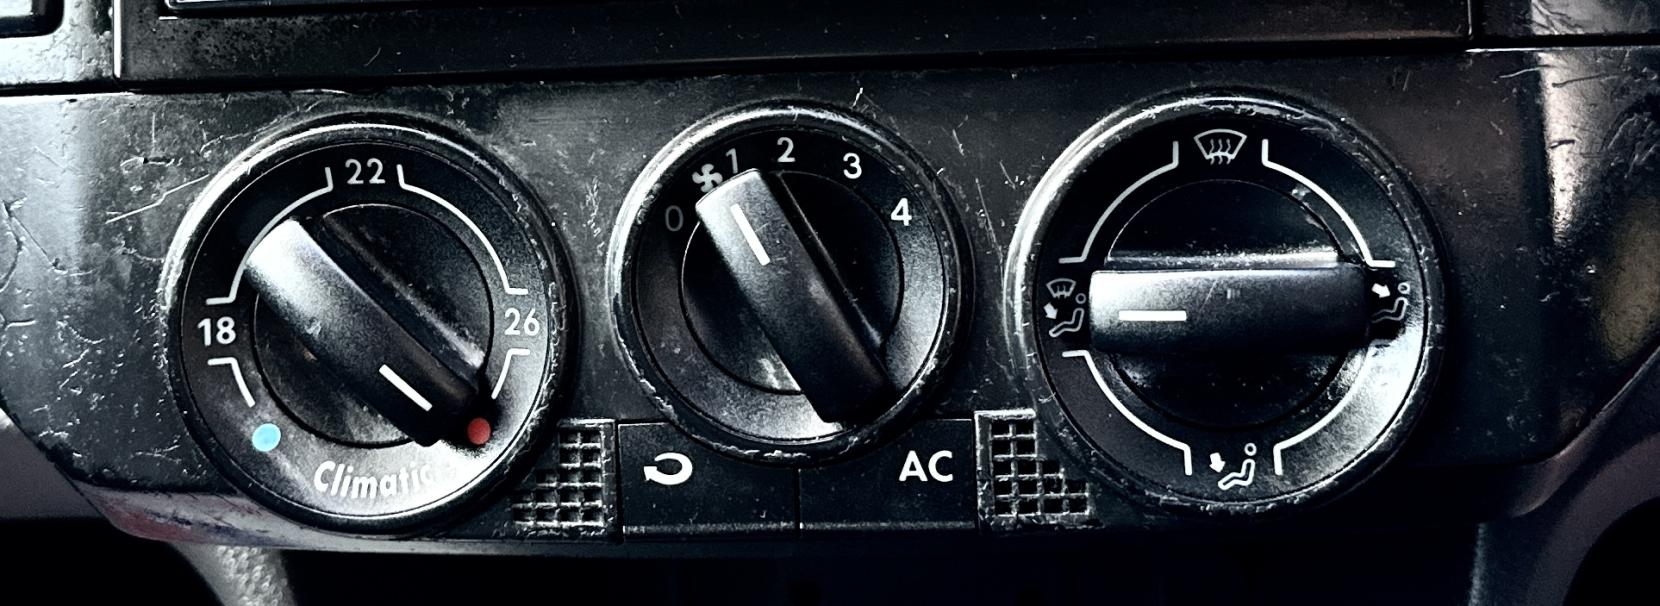 Volkswagen Polo 1.2 S Hatchback 3dr Petrol Manual (144 g/km, 55 bhp)